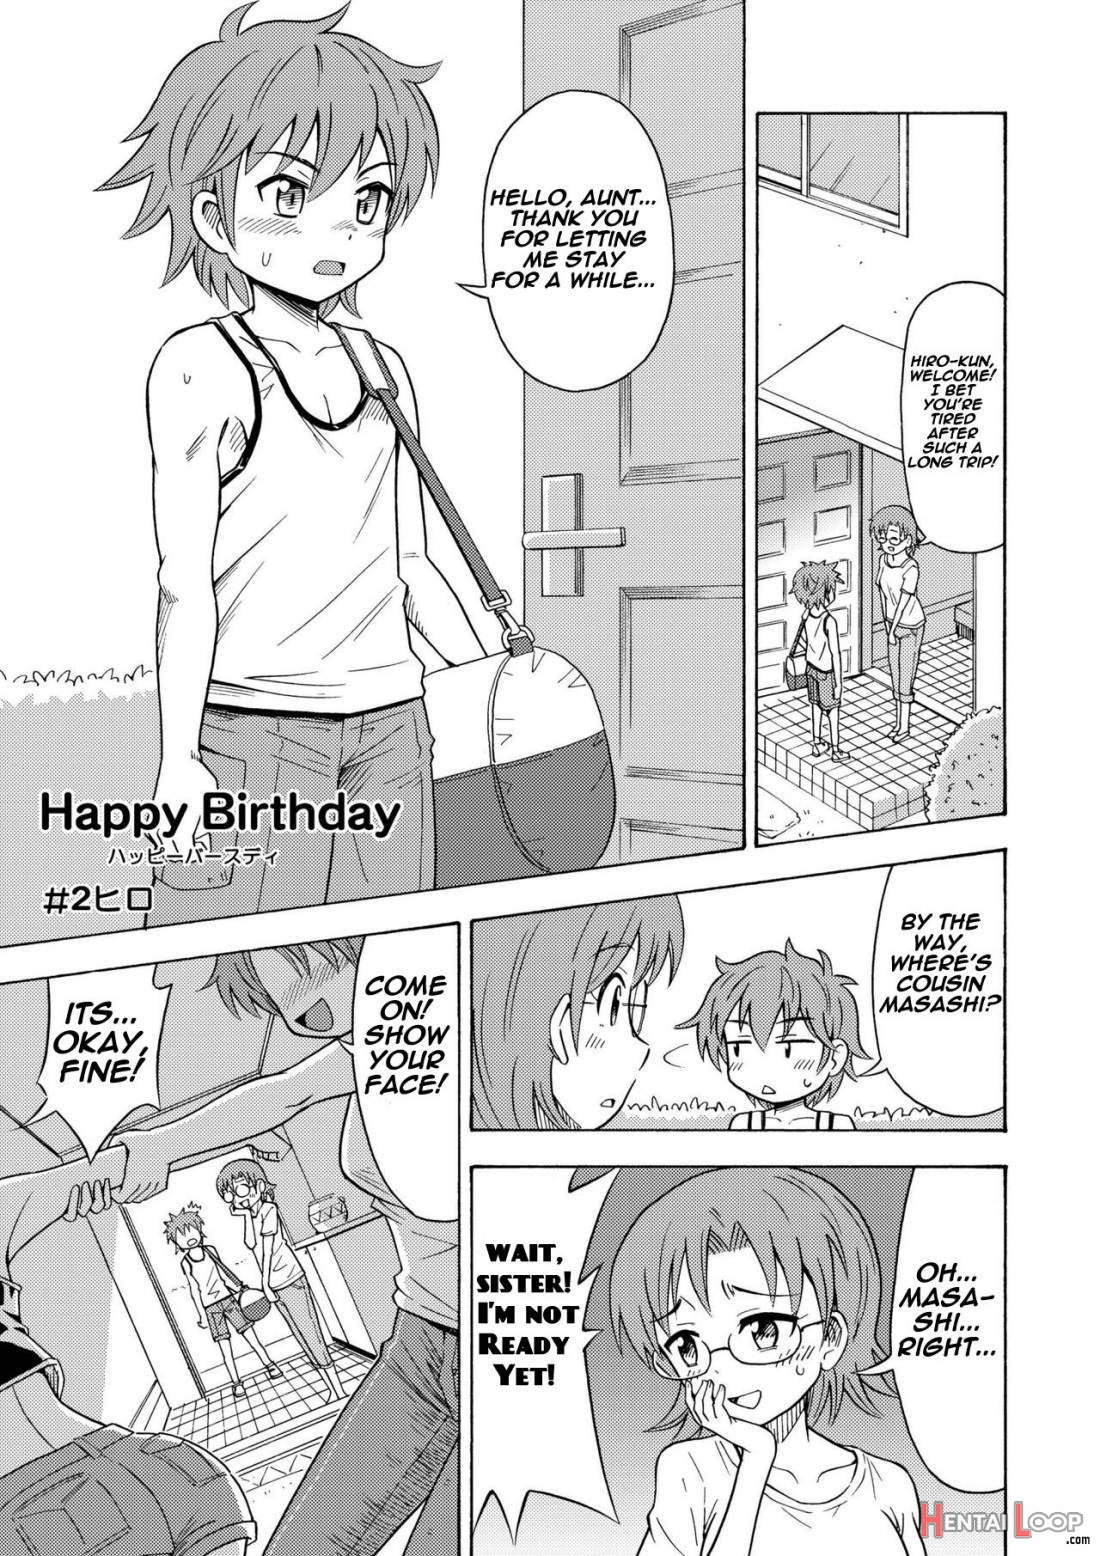 Happy Birthday page 10